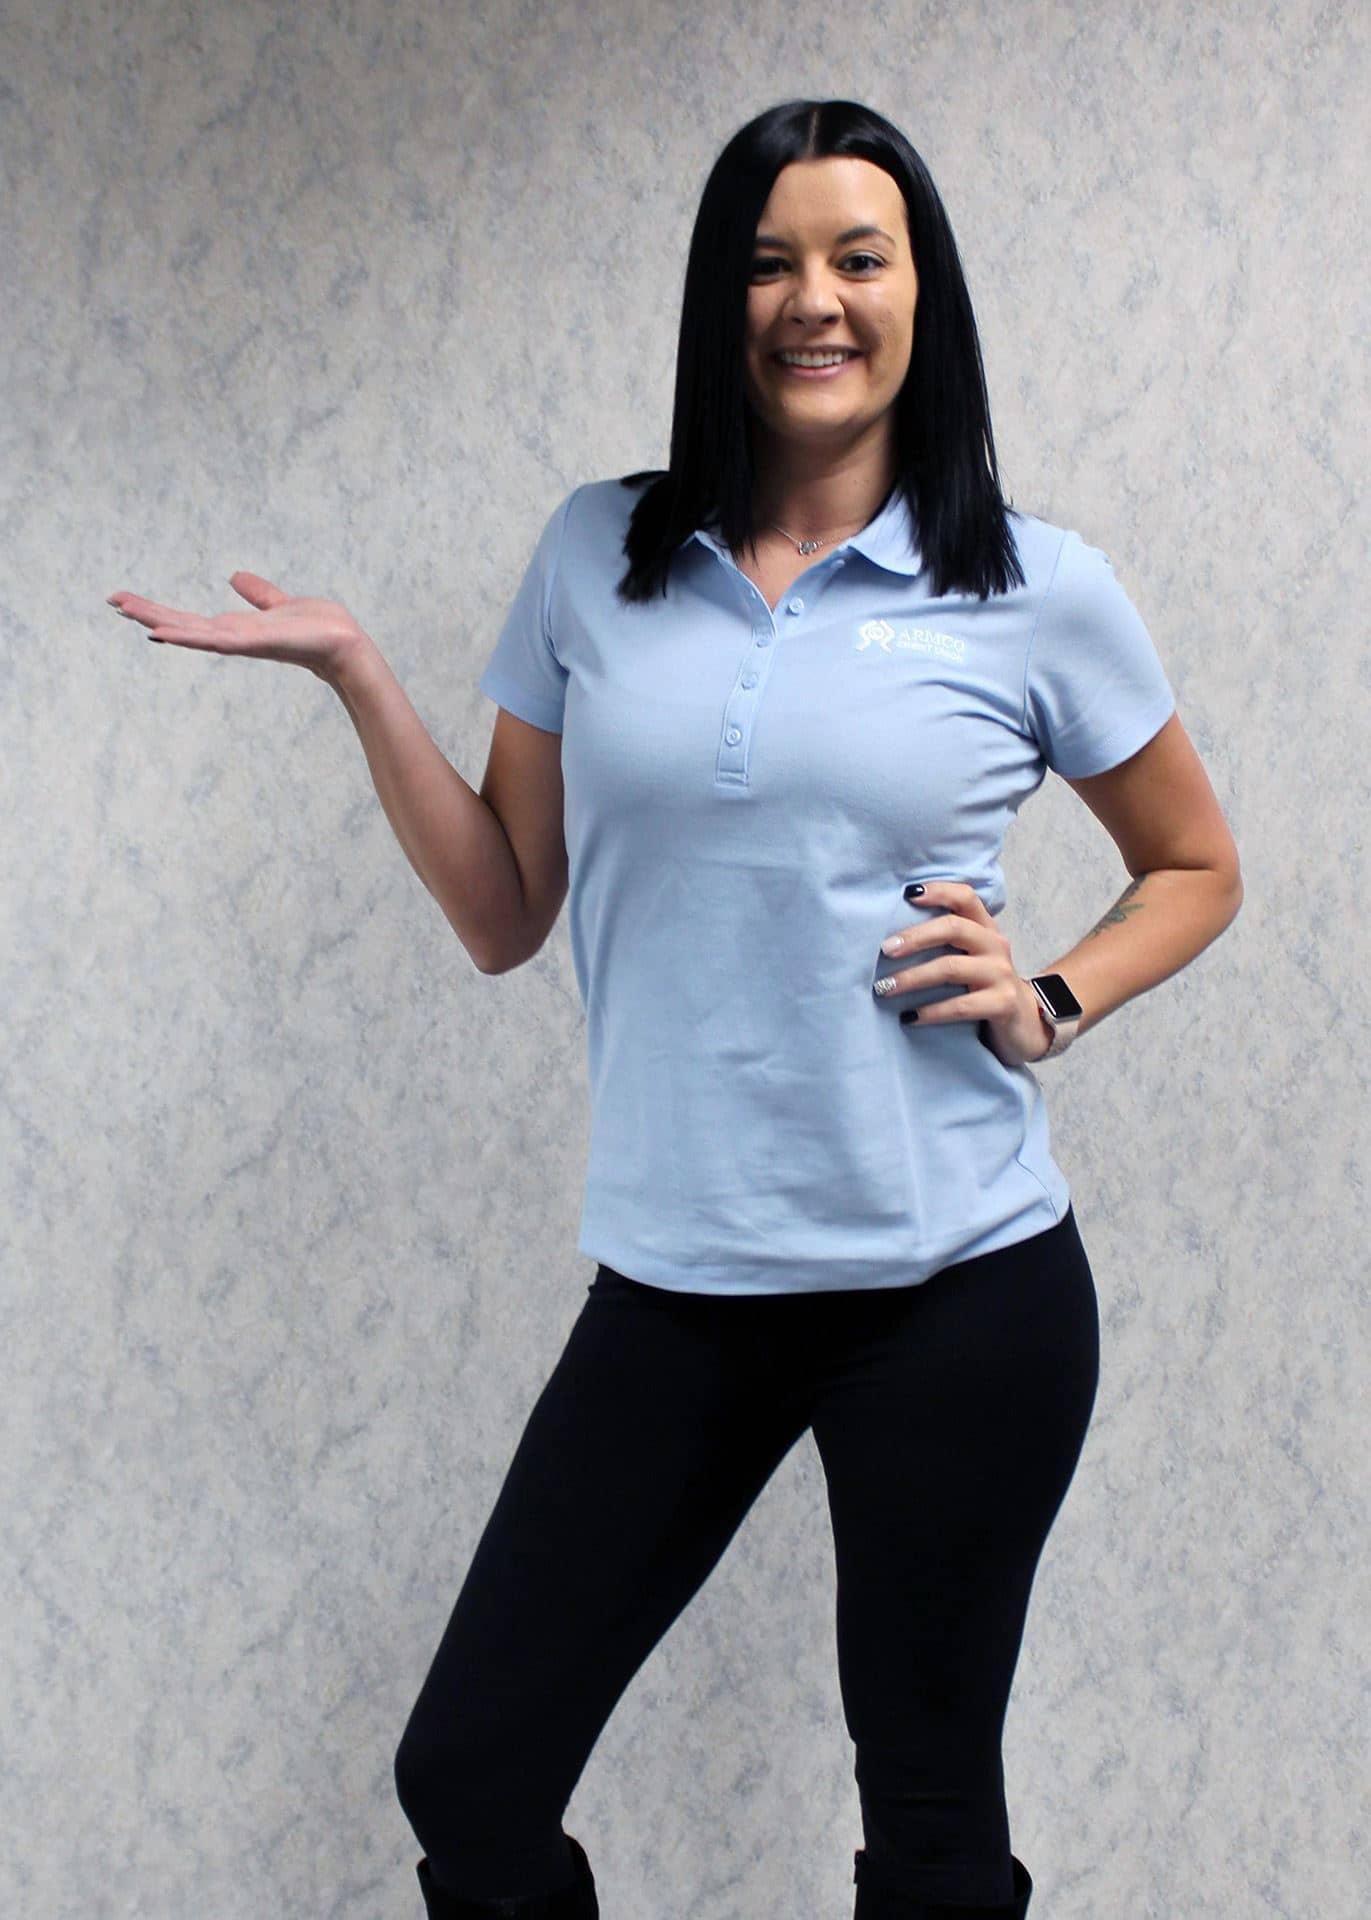 A woman wearing the light blue Armco CU polo shirt.